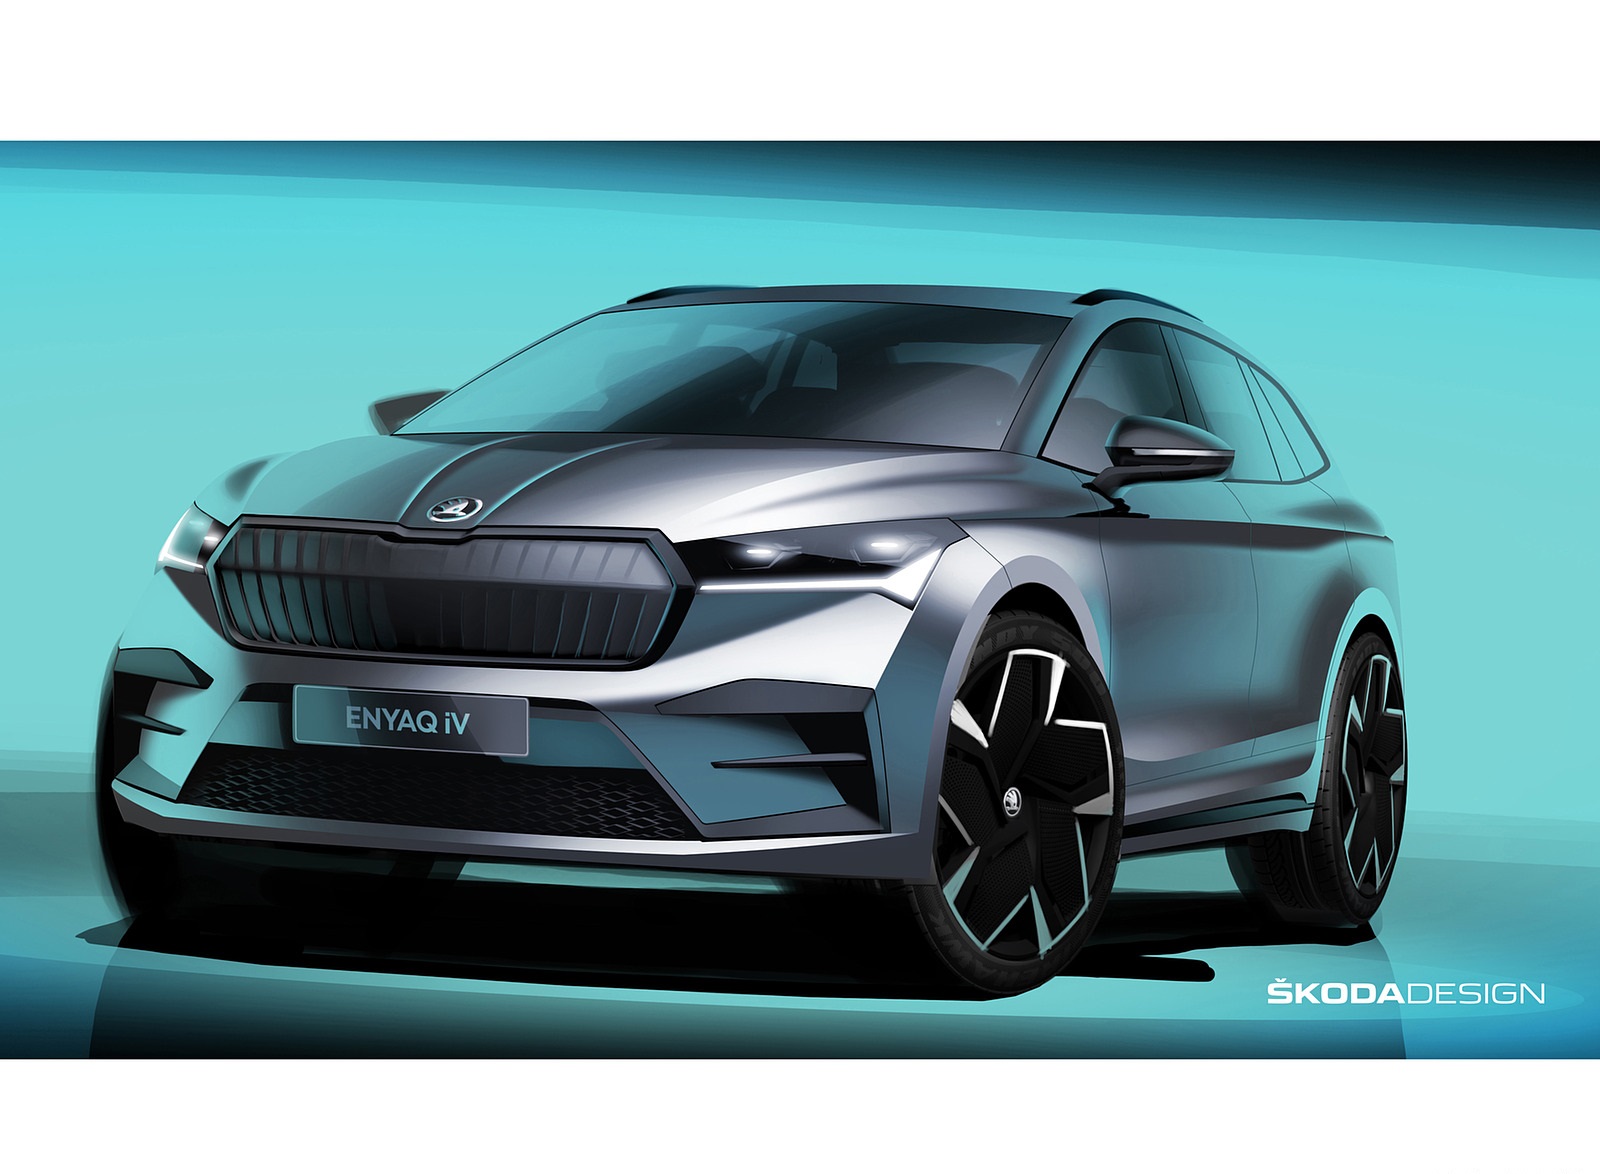 2021 Škoda ENYAQ iV Design Sketch Wallpapers #161 of 184